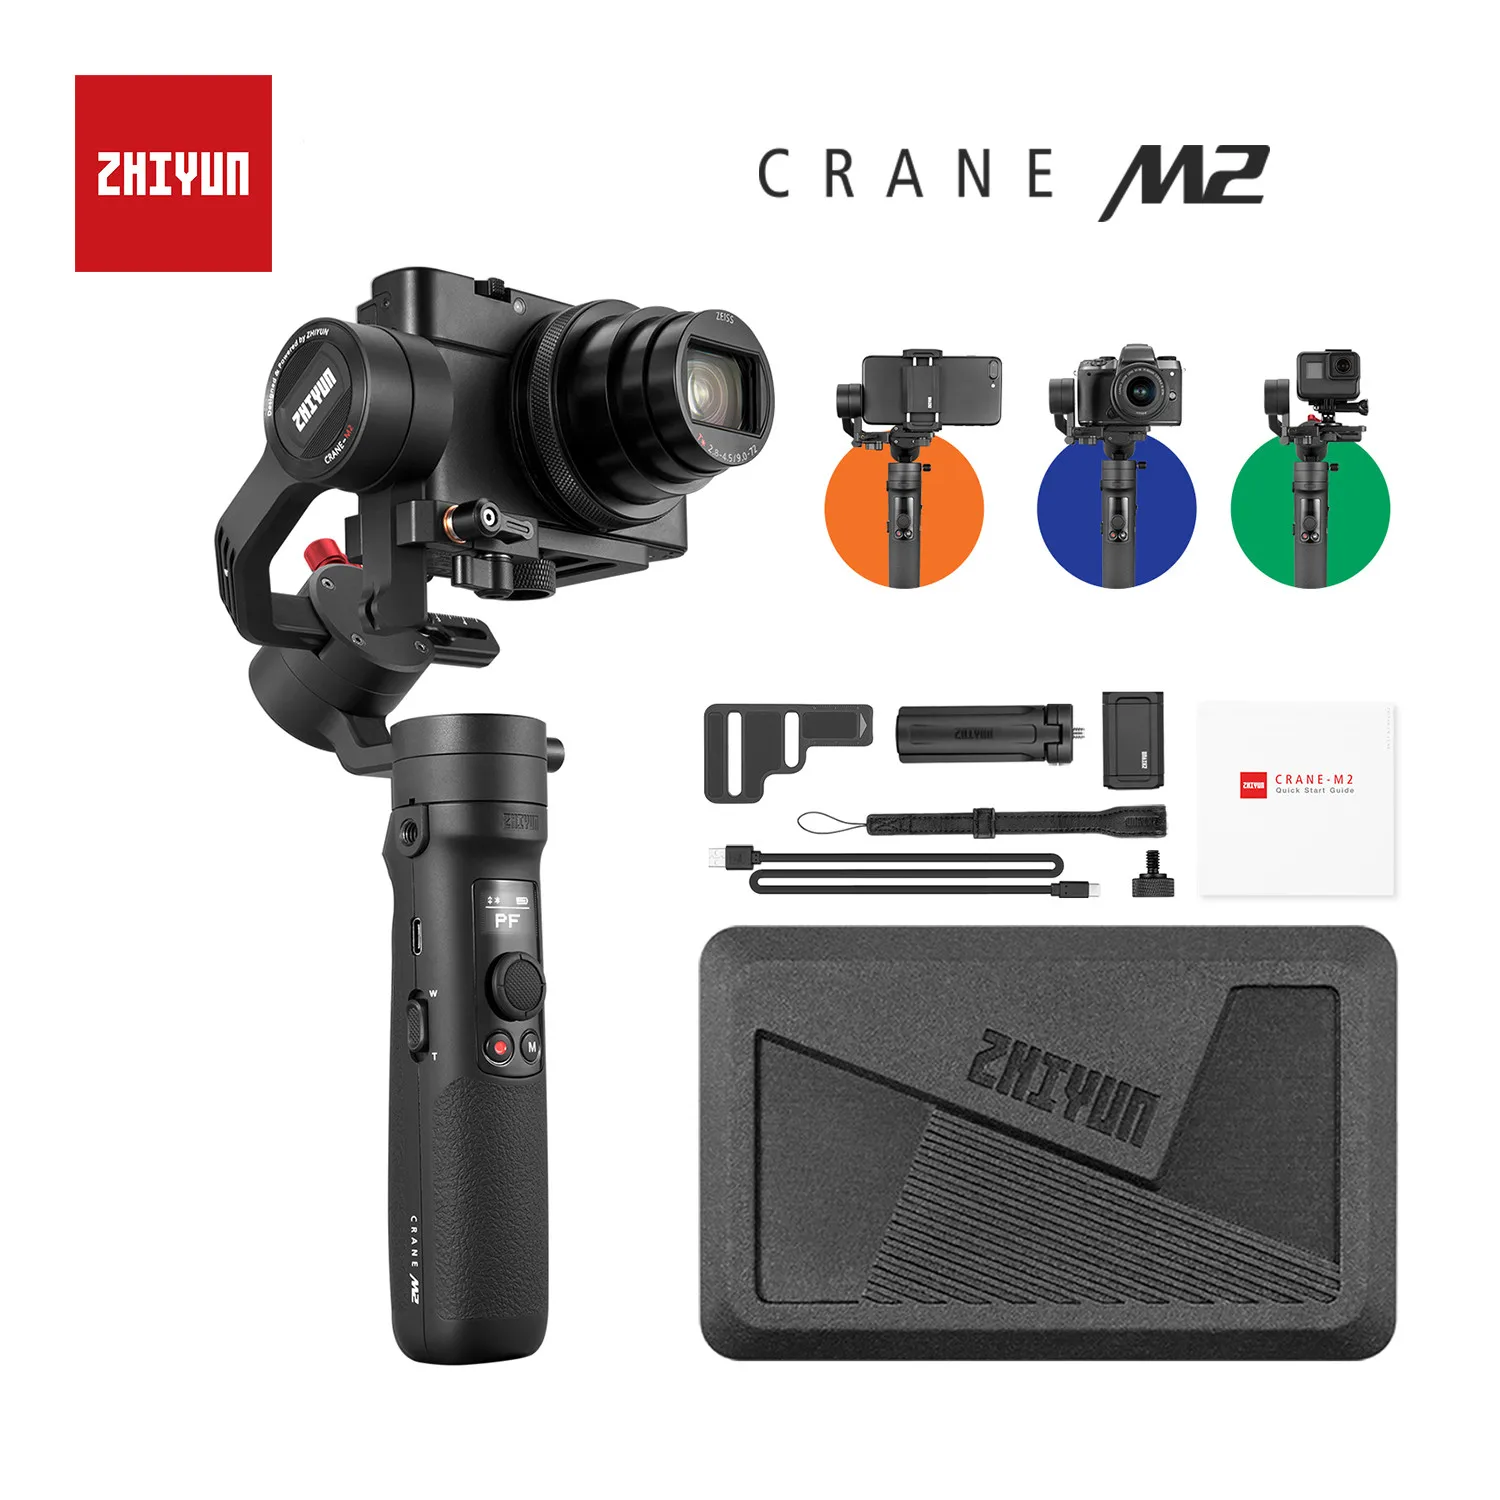 

ZHIYUN Crane M2 M2S M3 Camera Gimbals 3-Axis Handheld Gimbal Stabilizer for Smartphone Mirrorless Cameras Action Camera